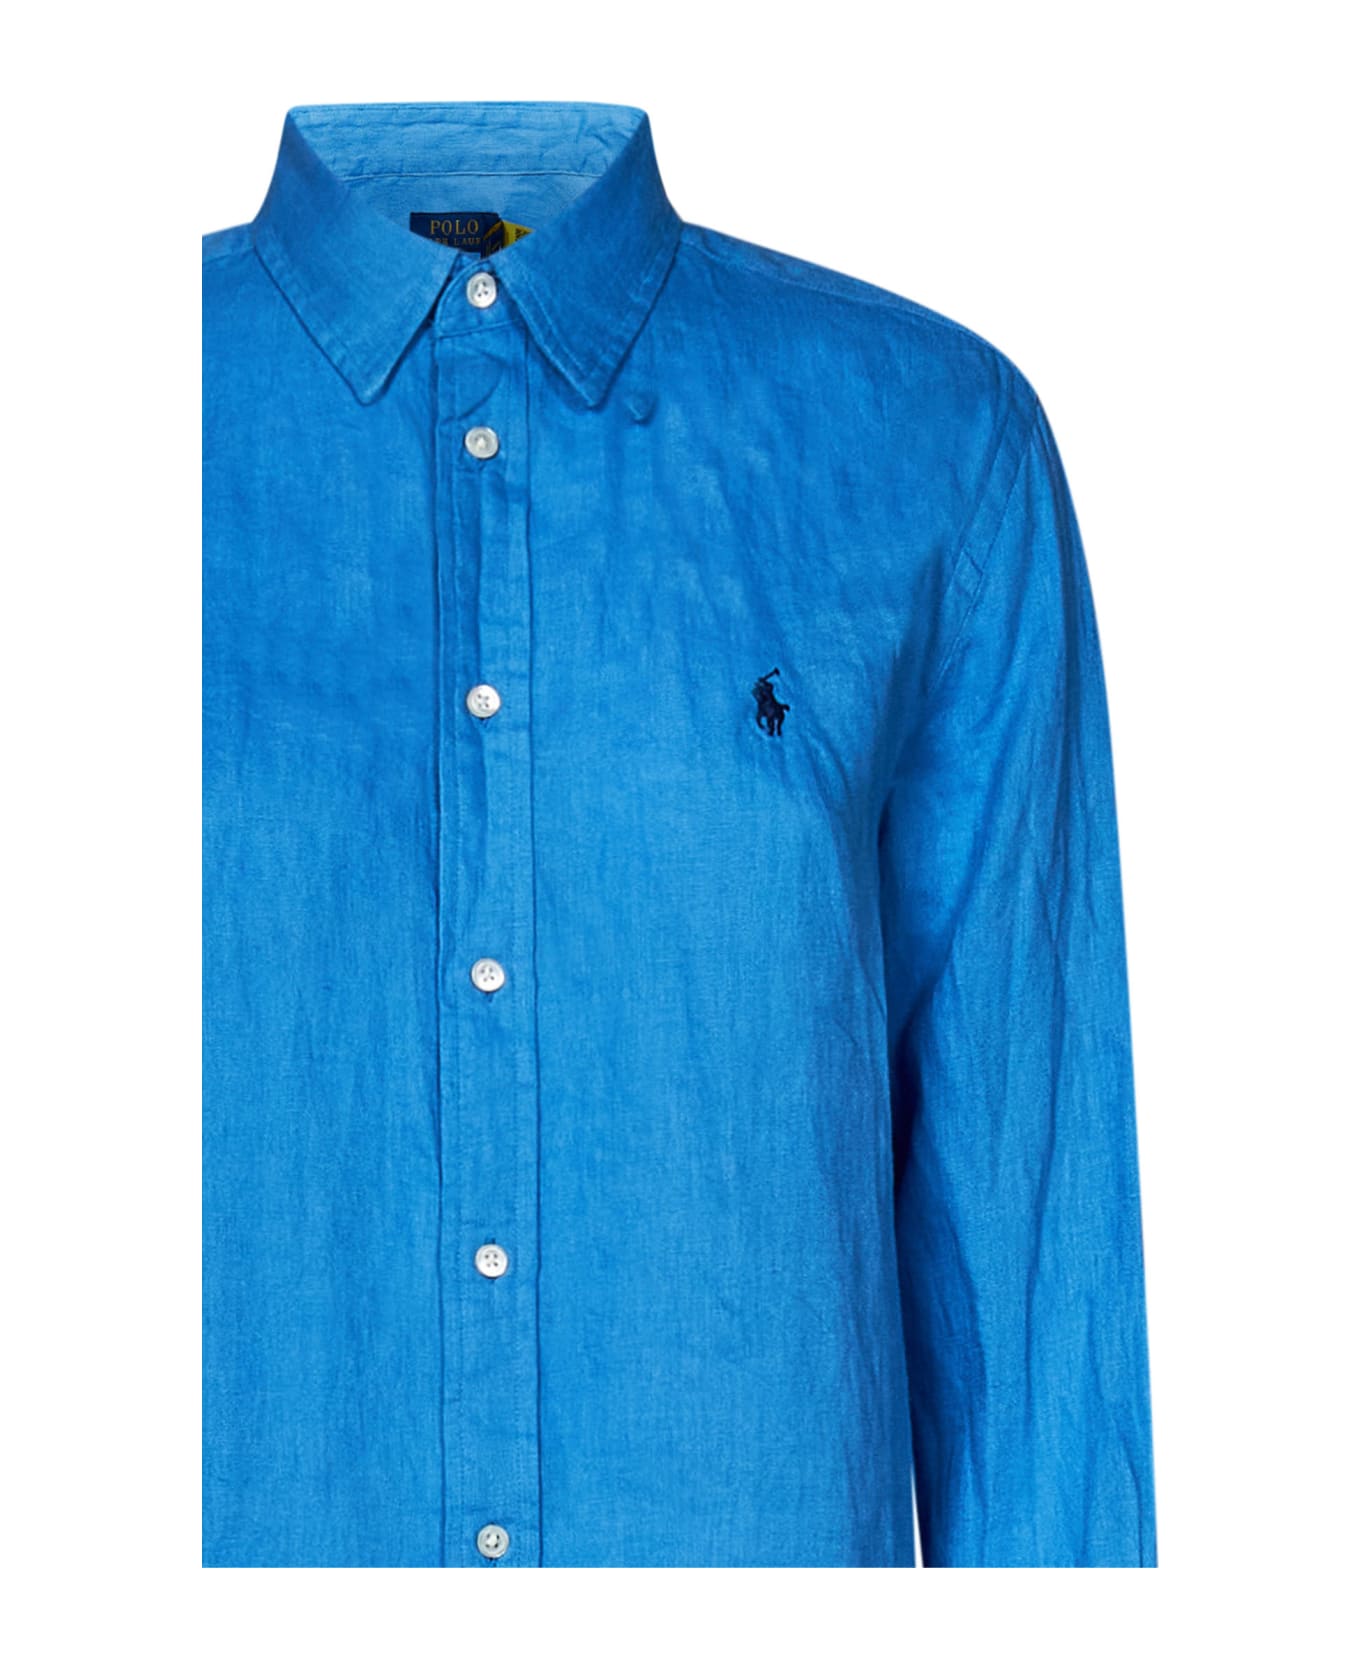 Polo Ralph Lauren Logo Embroidered Round Hem Shirt - Blue